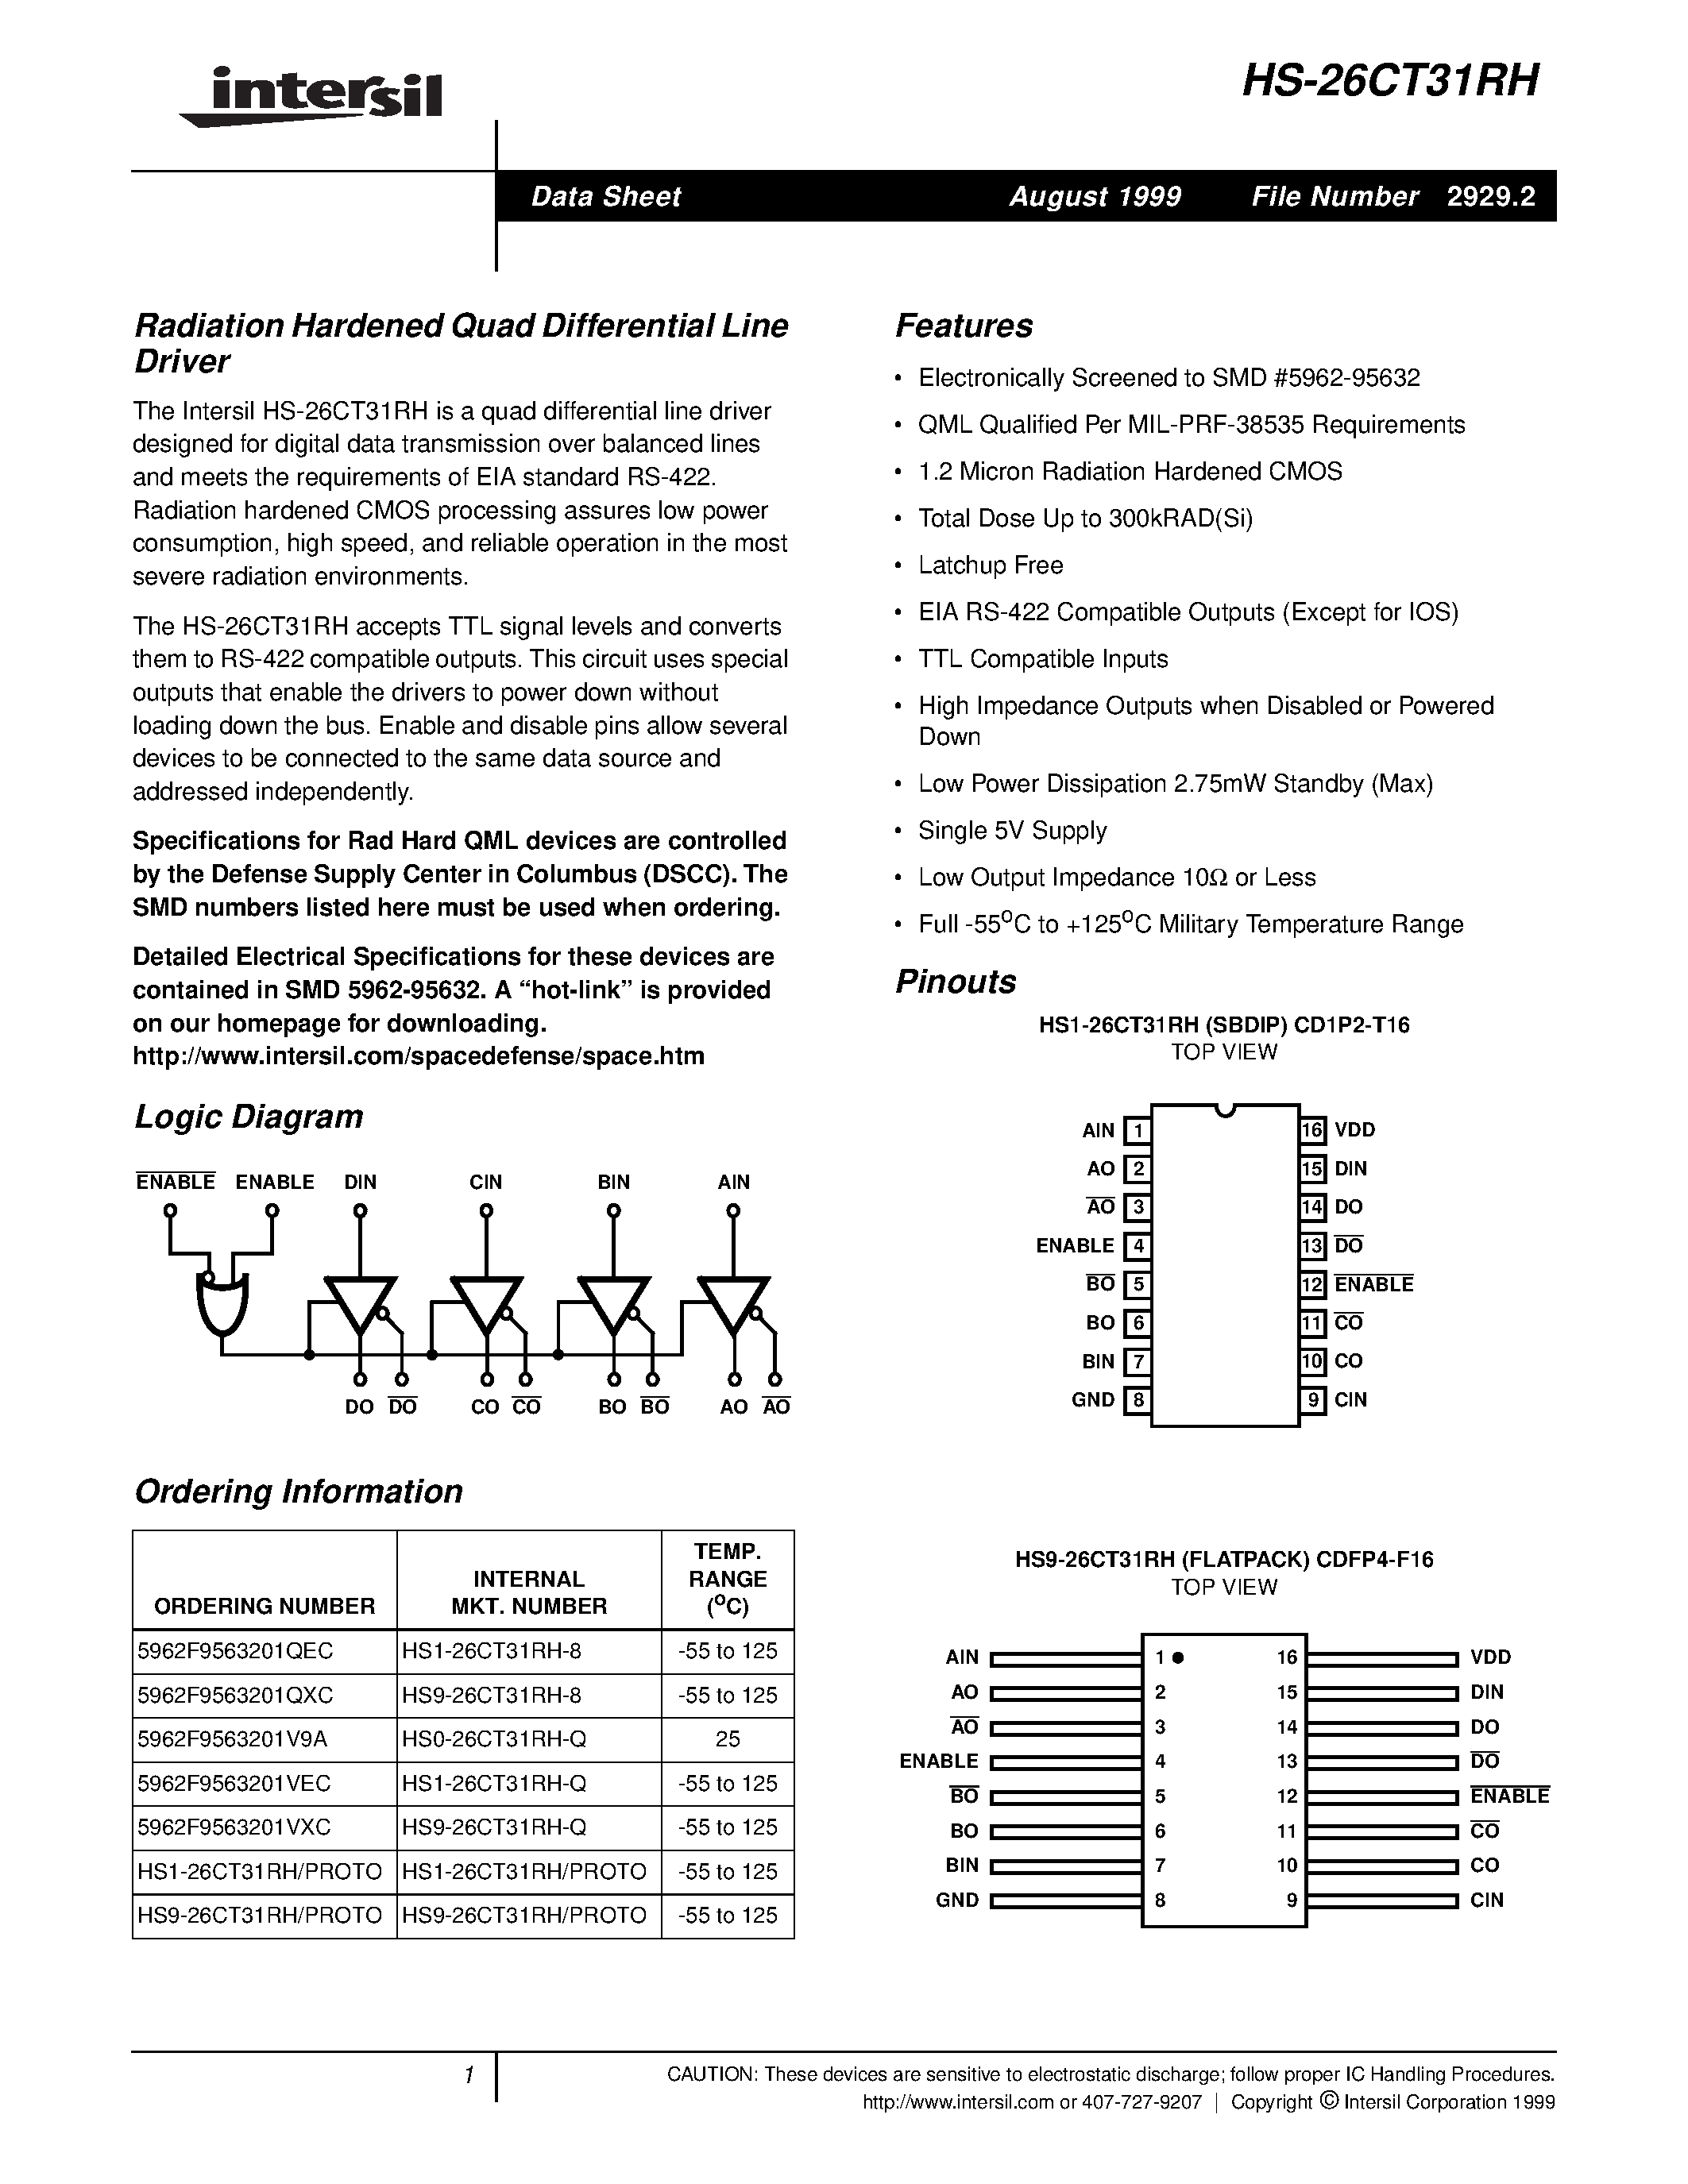 Даташит HS9-26CT31RH-Q - Radiation Hardened Quad Differential Line Driver страница 1